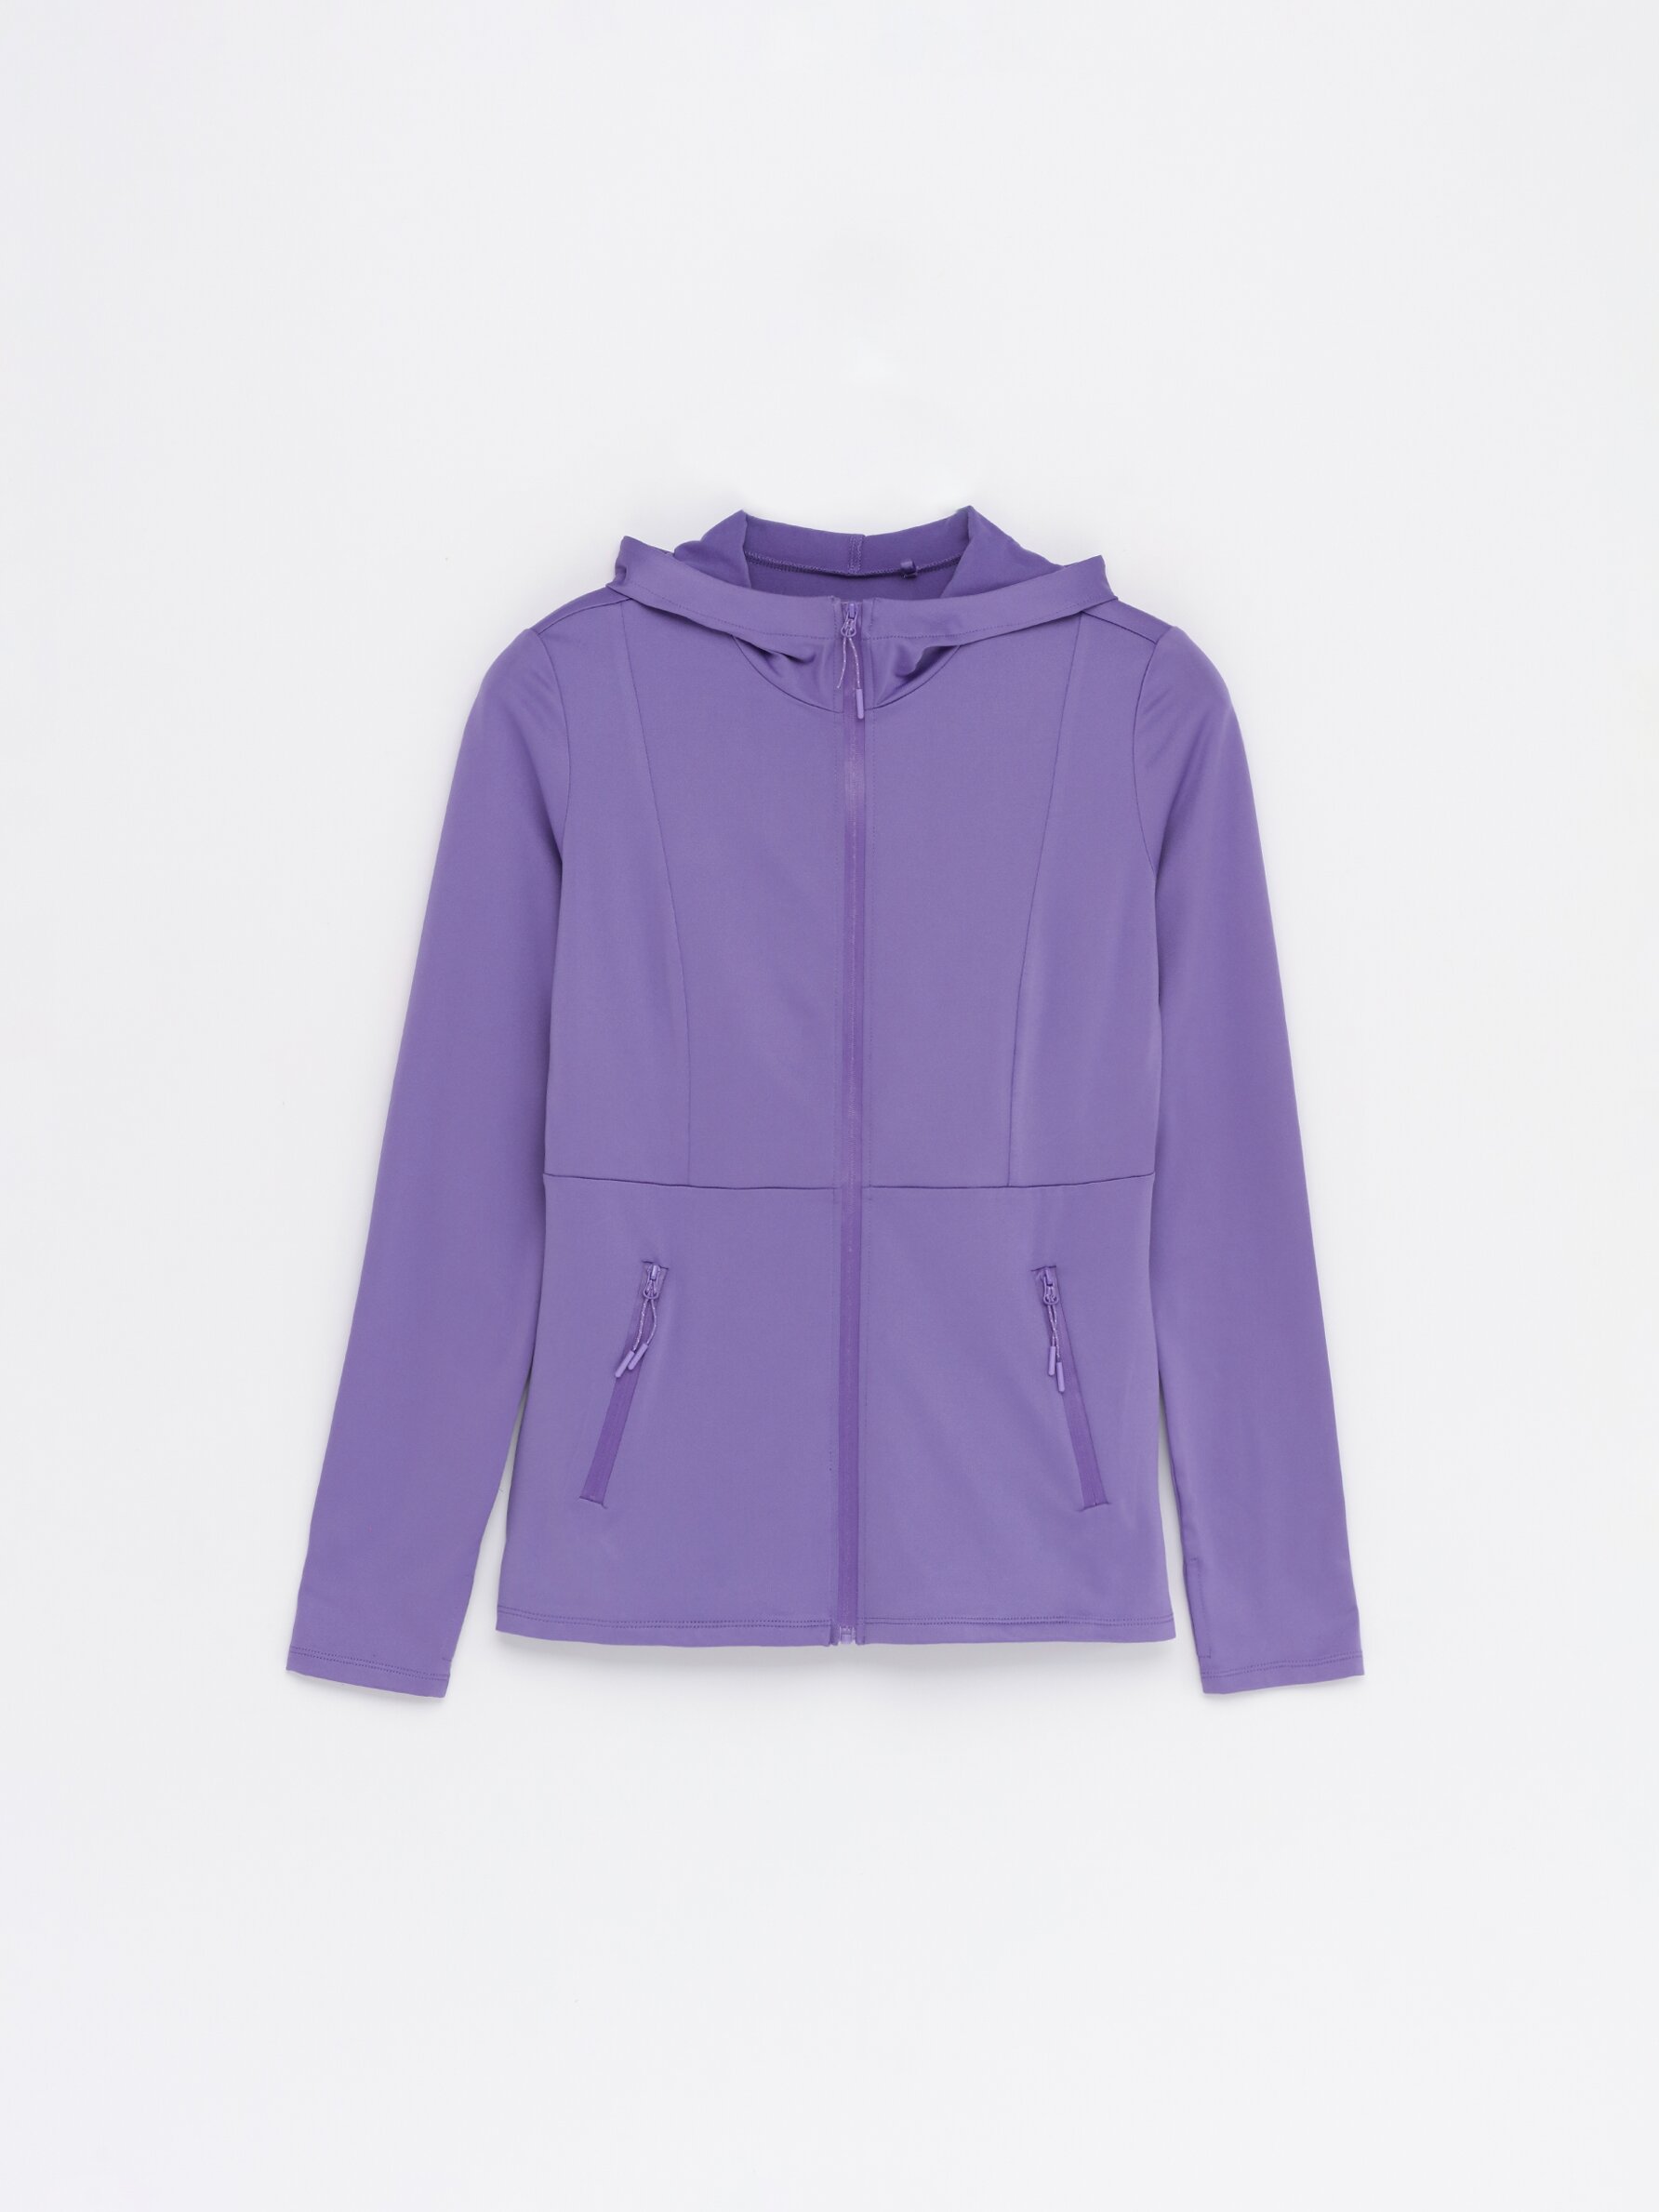 Women's Lulu Lemon Purple Thumb Hole Sleeves Zip Front Athletic Jacket S/M